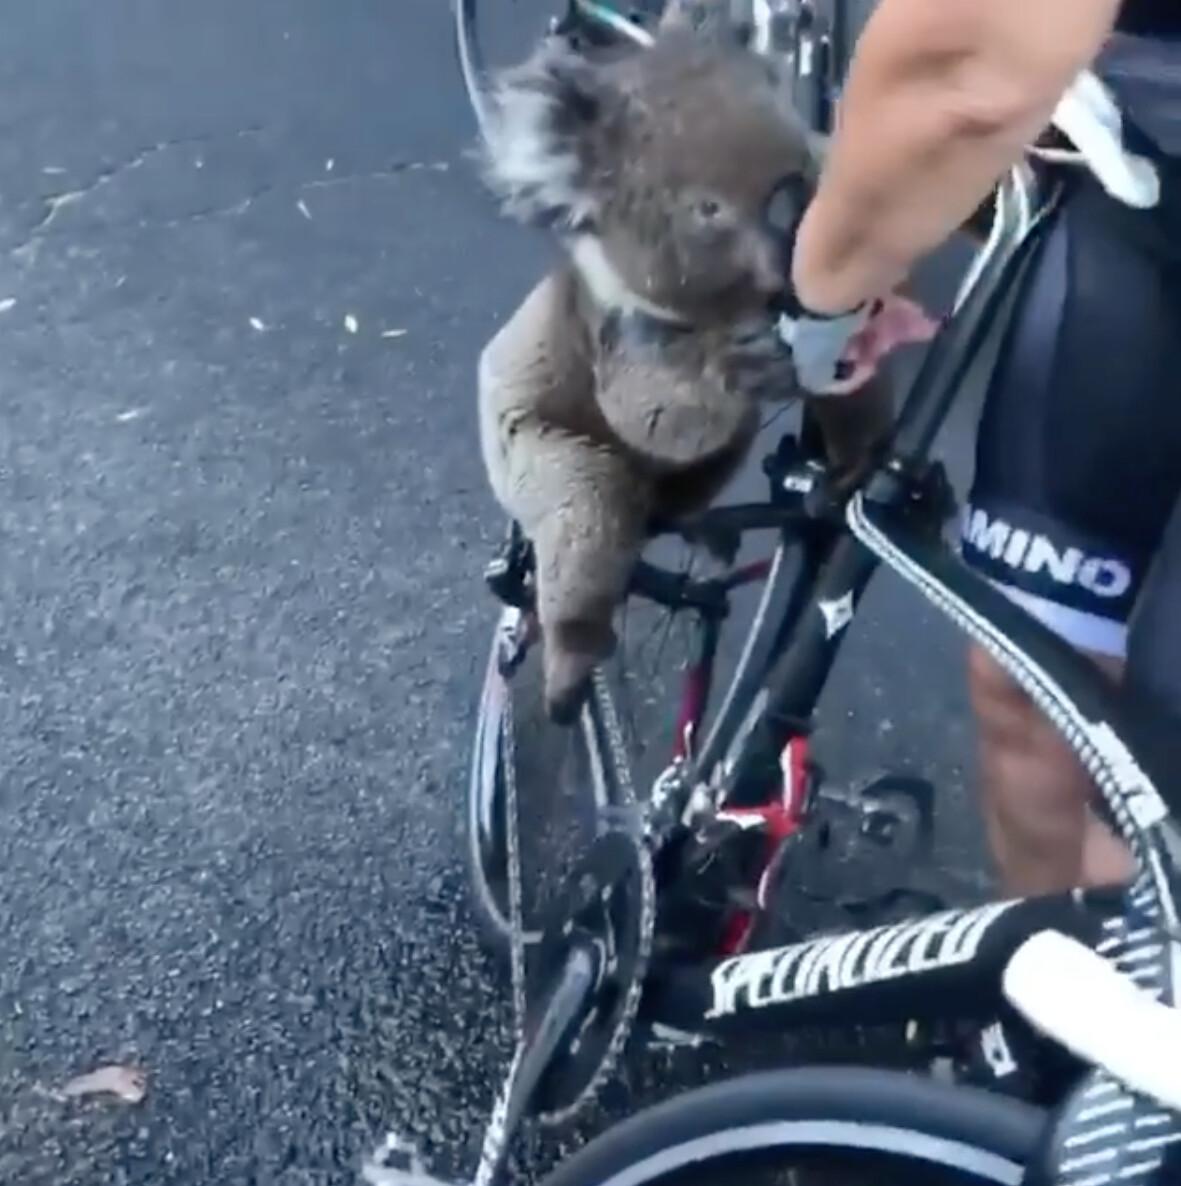  ©Instagram Video Screenshot | <a href="https://www.instagram.com/p/B6jjpHMlStM/">bikebug2019 </a>